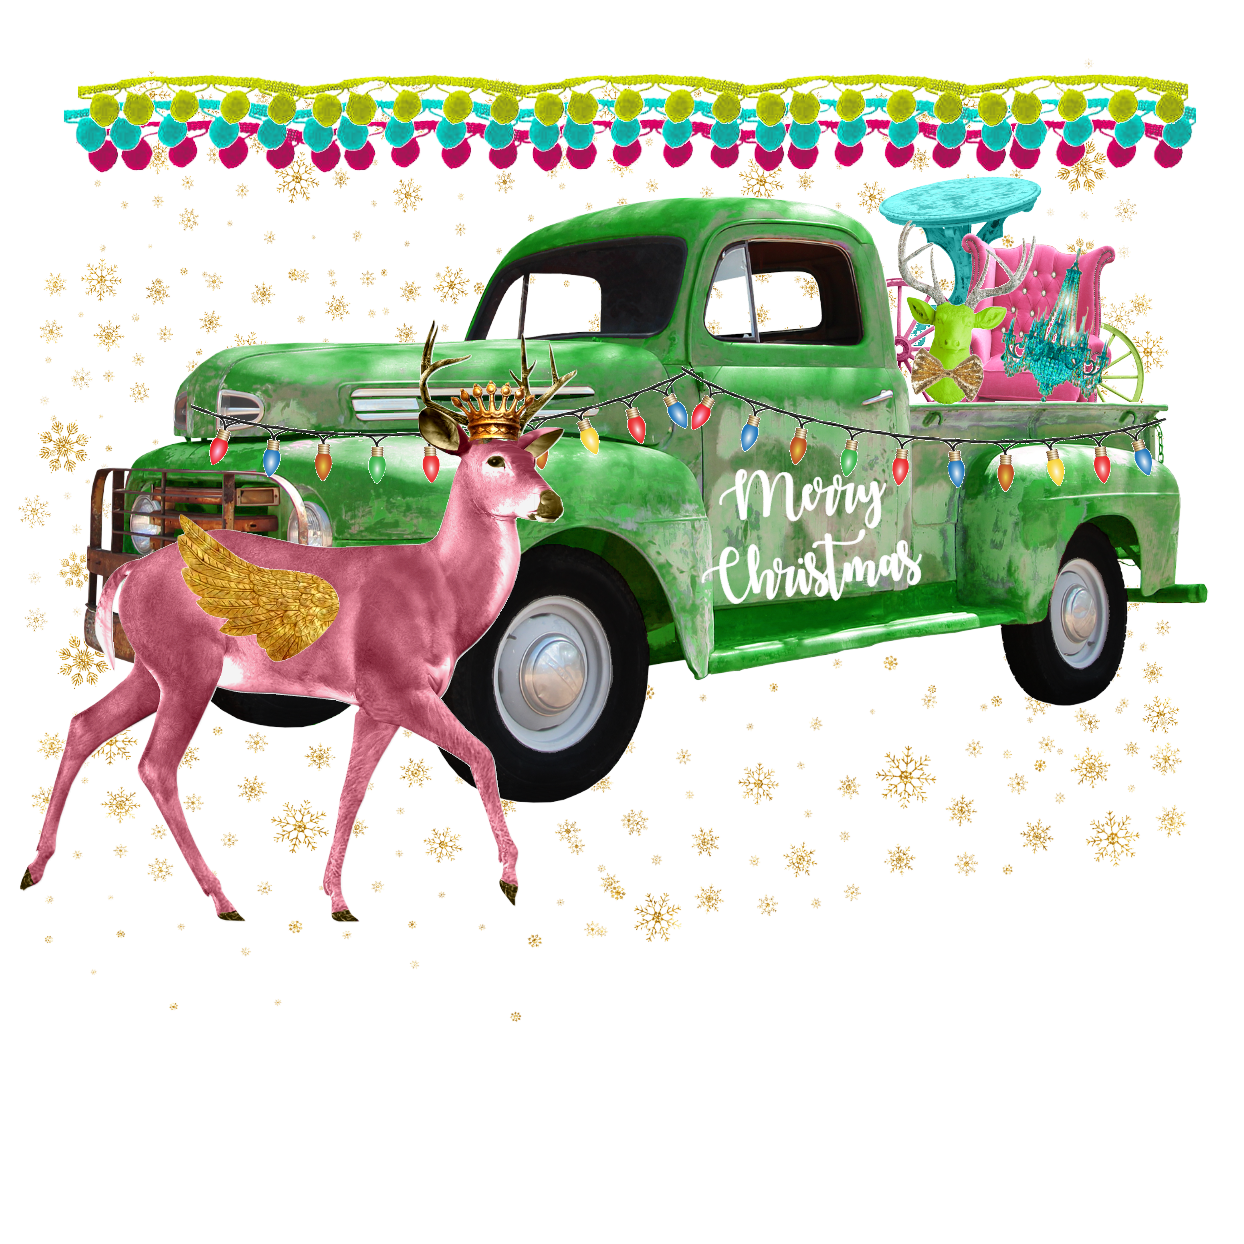 #128 Merry Christmas (truck)